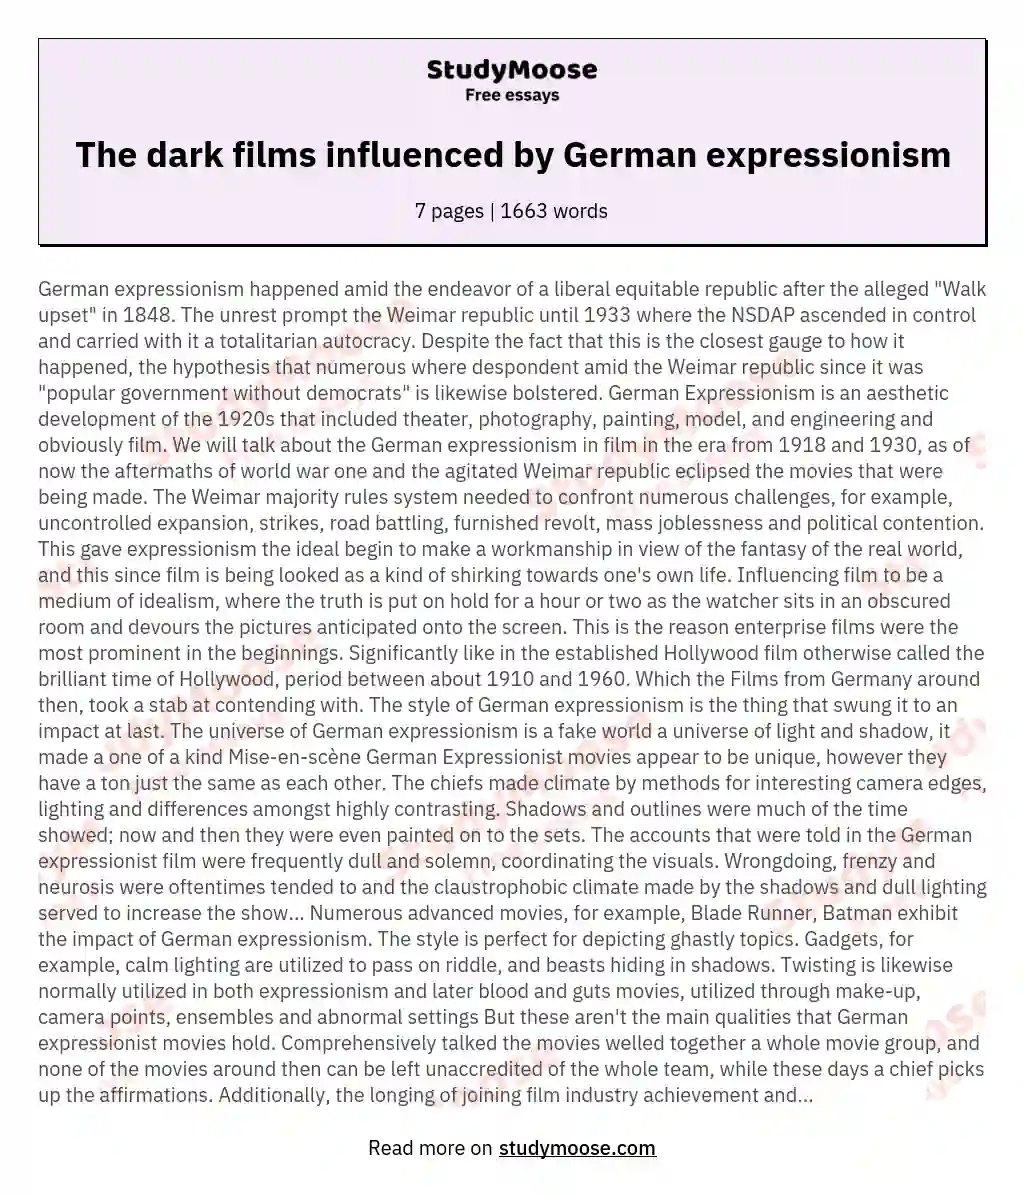 The dark films influenced by German expressionism essay